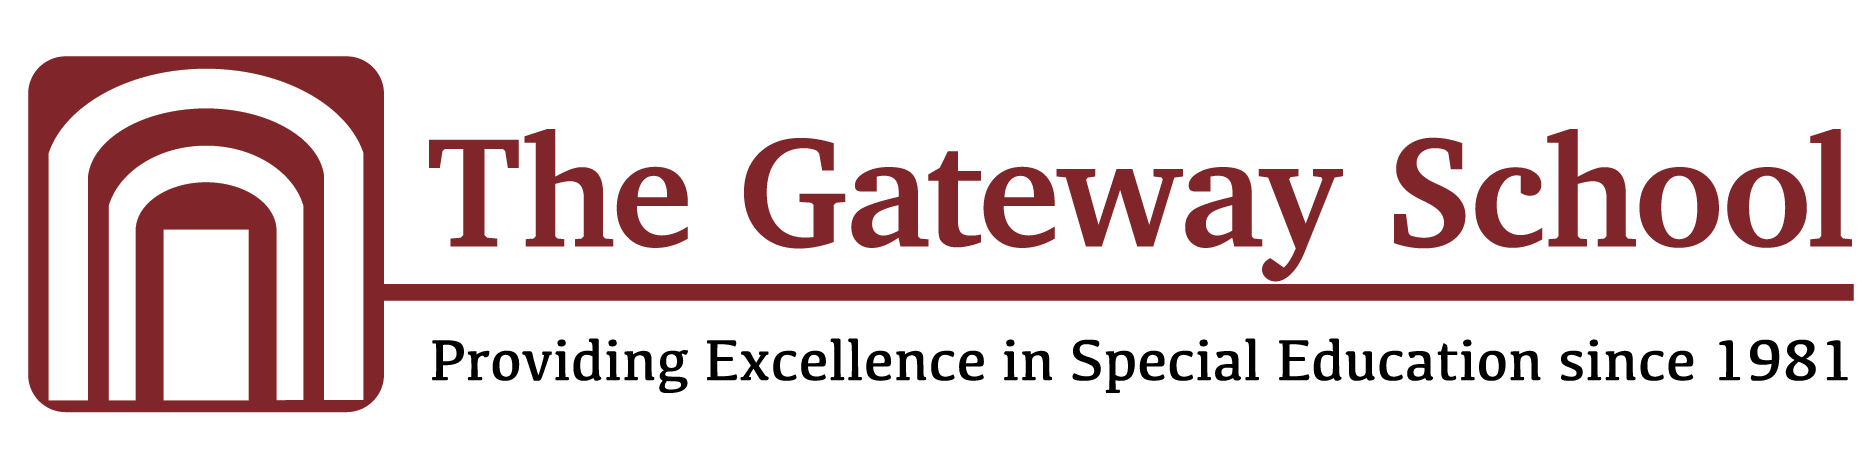 The Gateway School